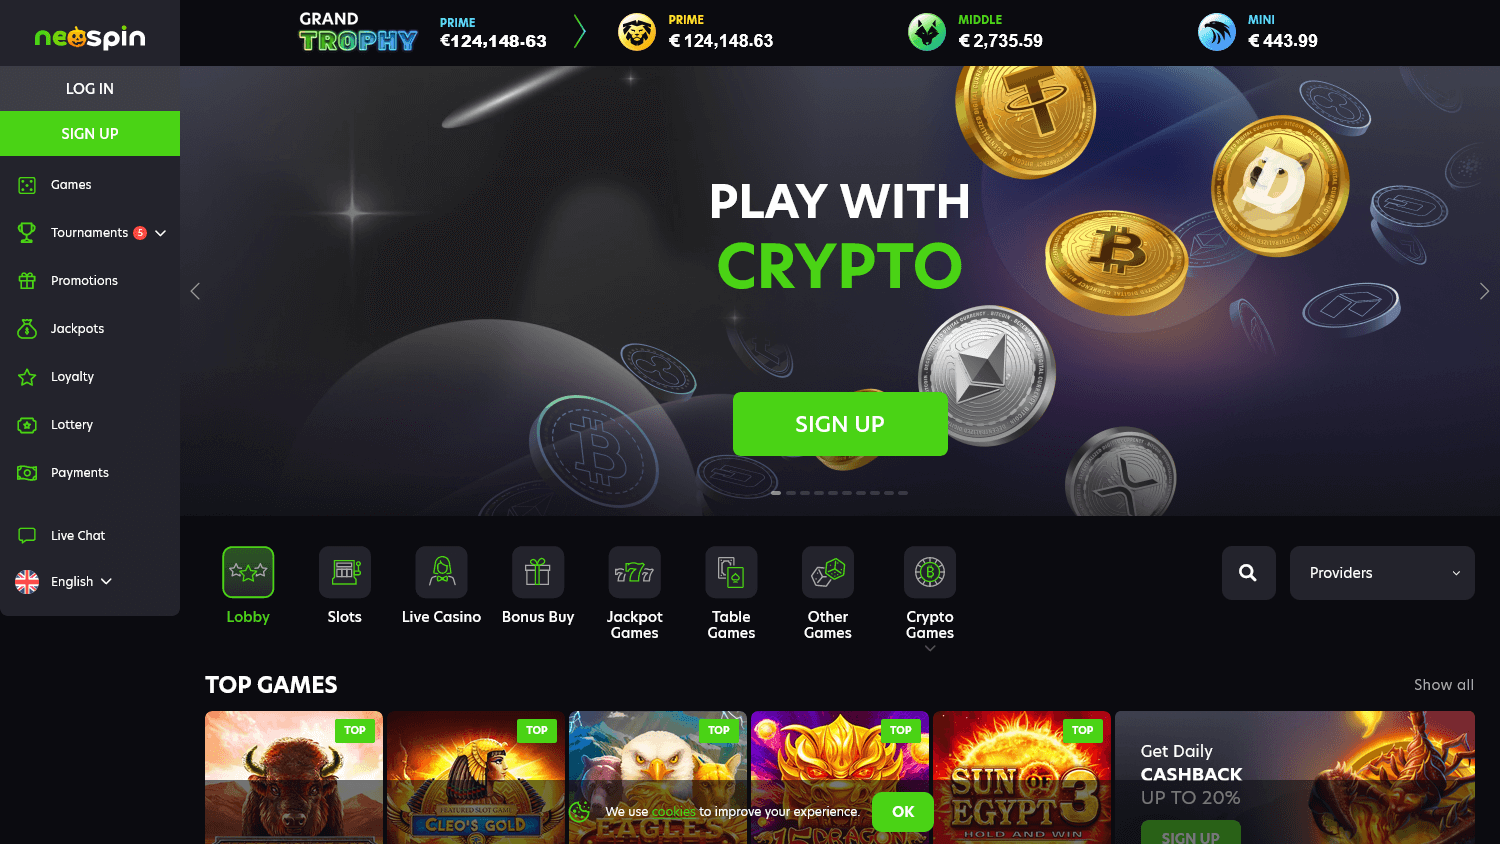 neospin_casino_homepage_desktop